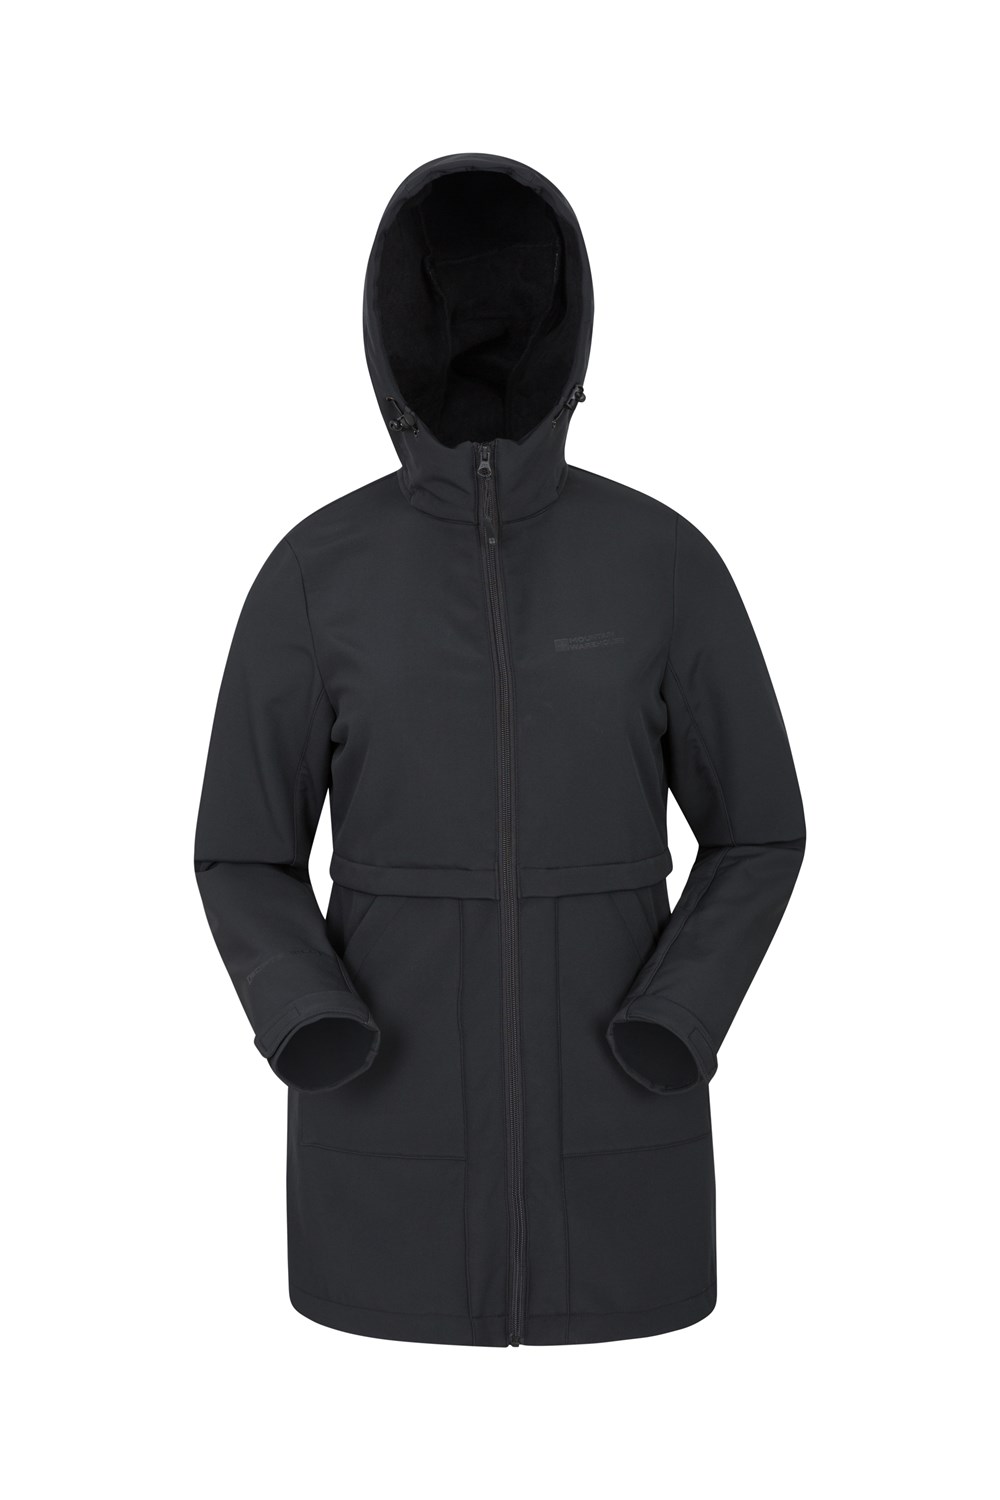 Mountain Warehouse Artic Longline Softshell Womens Jacket Windproof ...